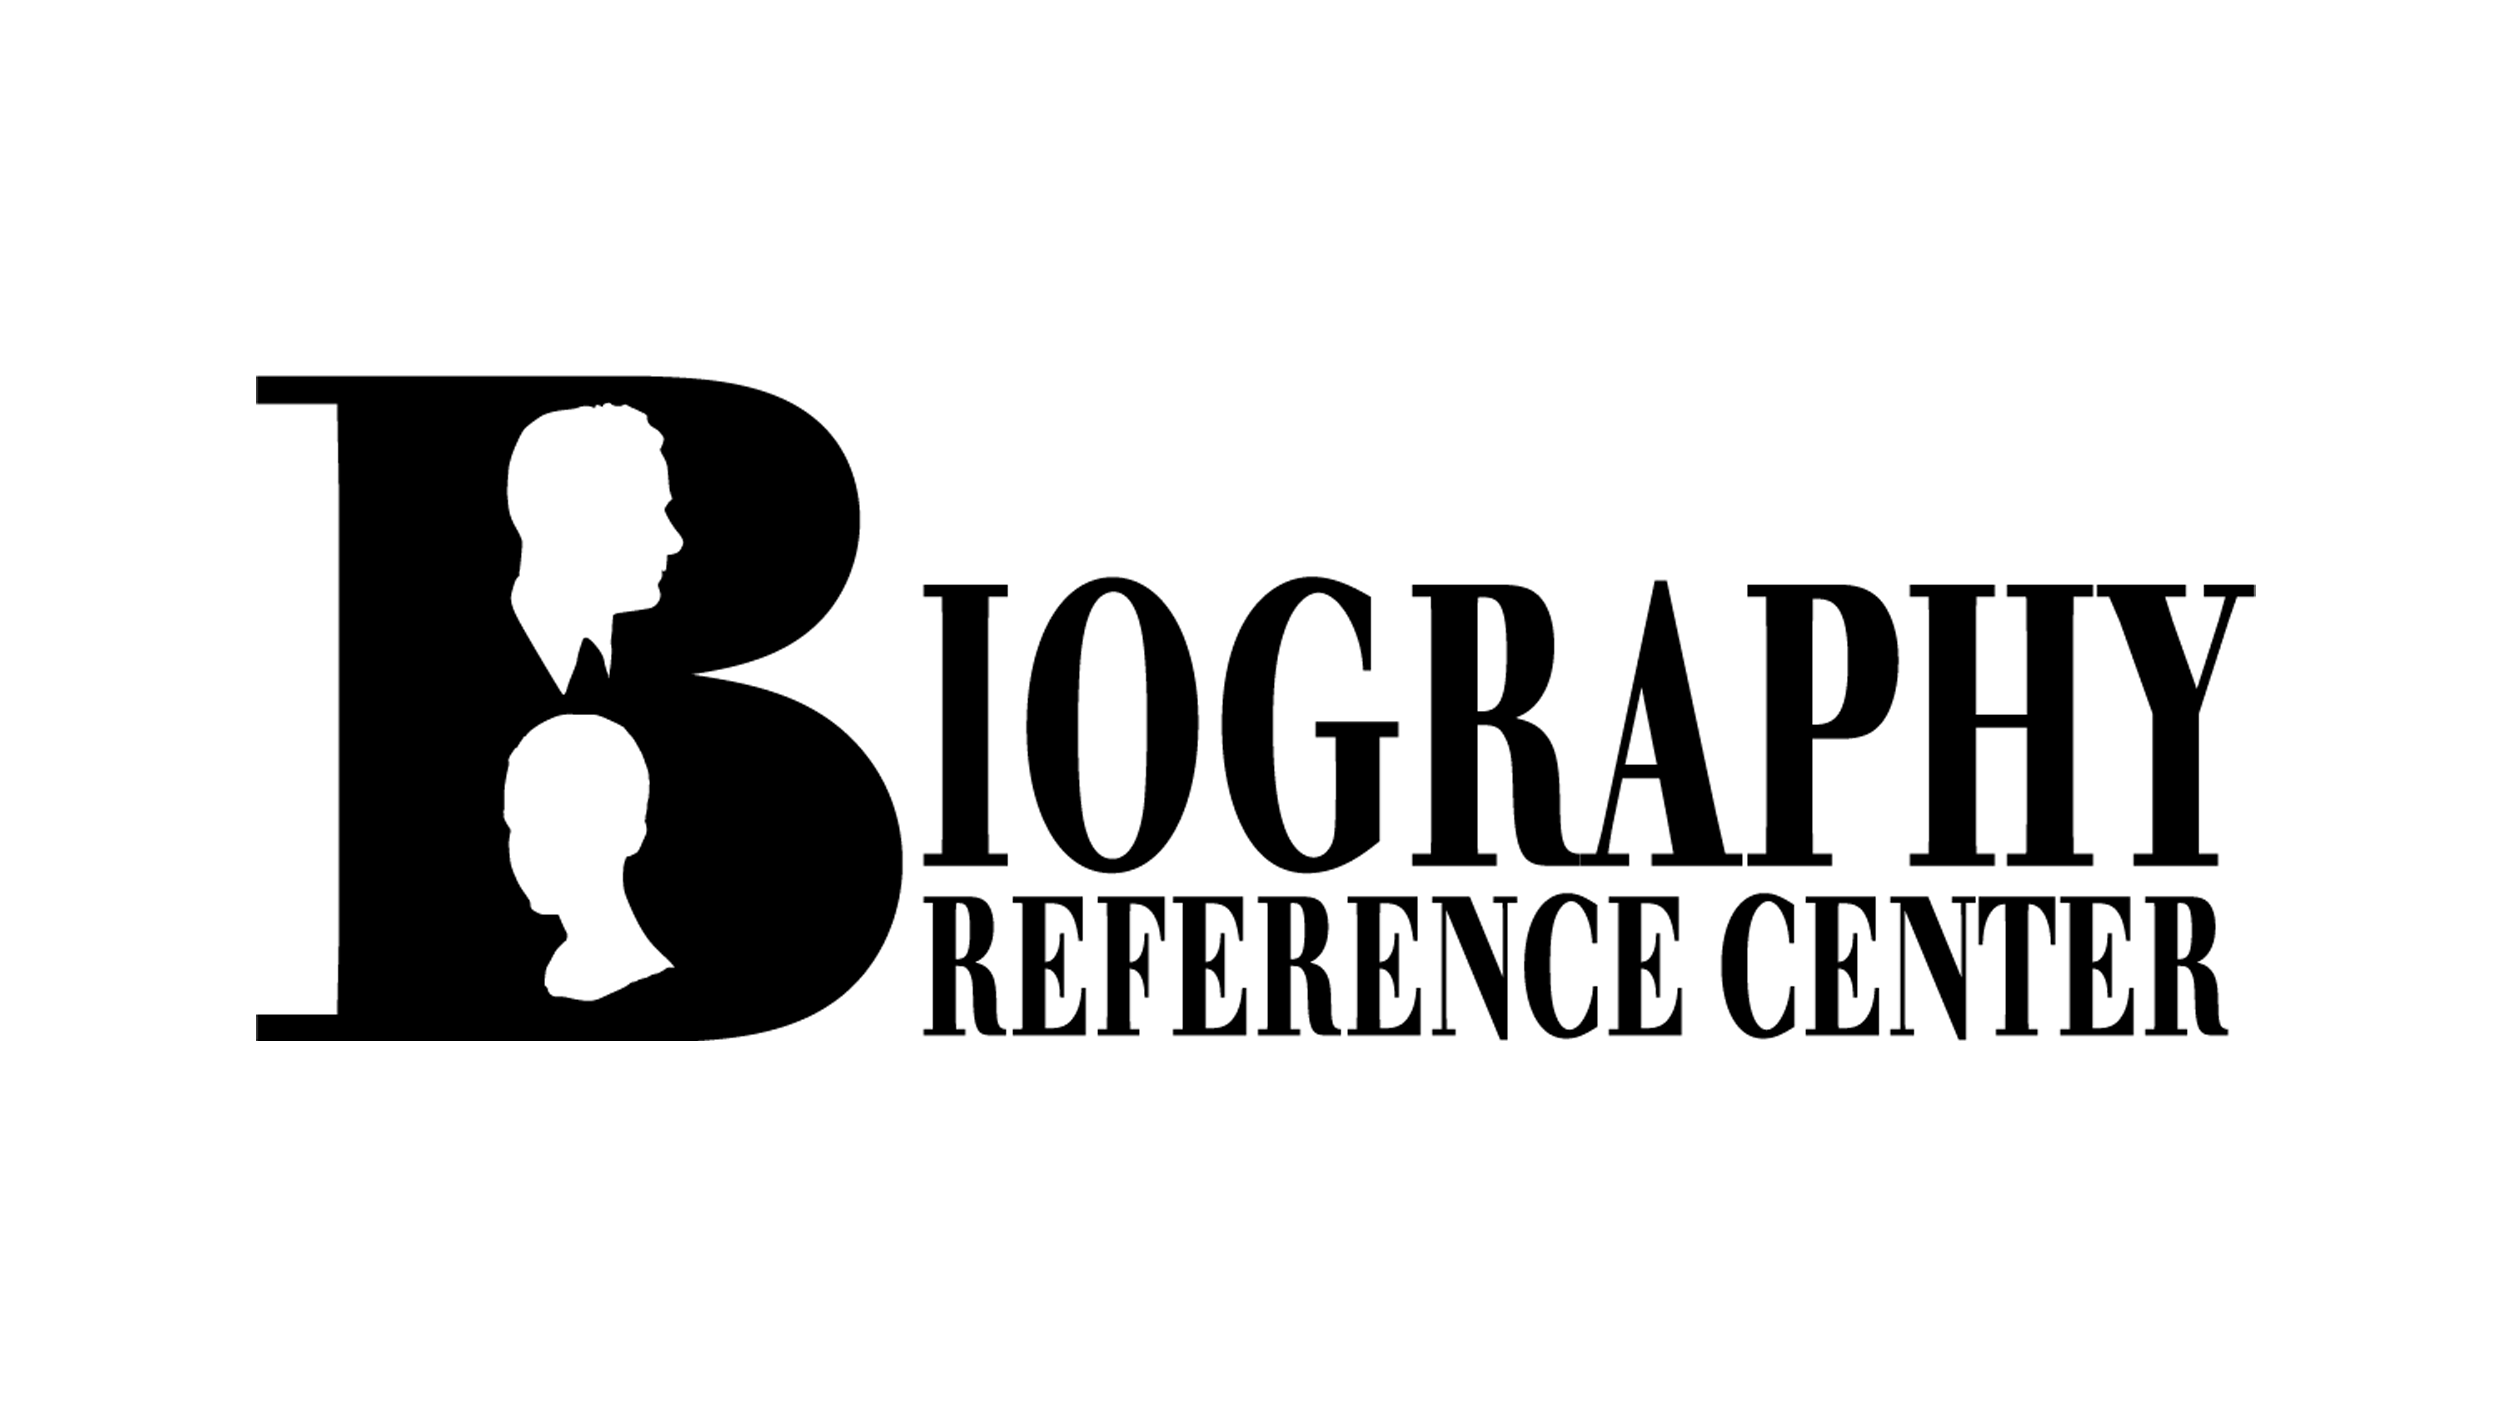 Reference.com Logo - Biography Reference Center